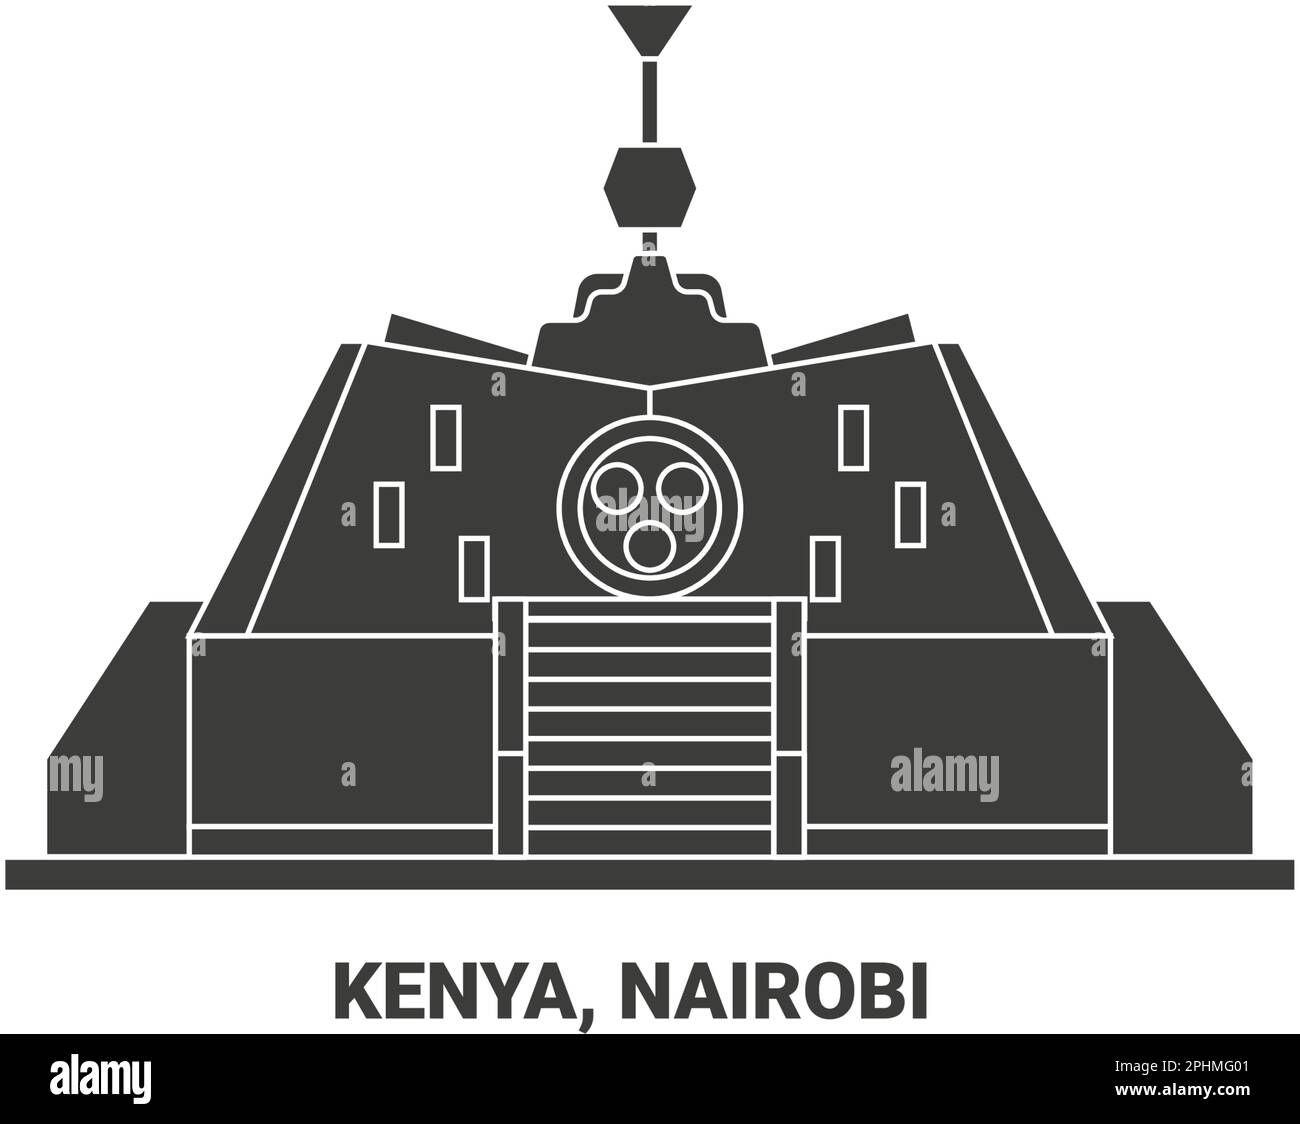 Kenya, Nairobi travel landmark vector illustration Stock Vector